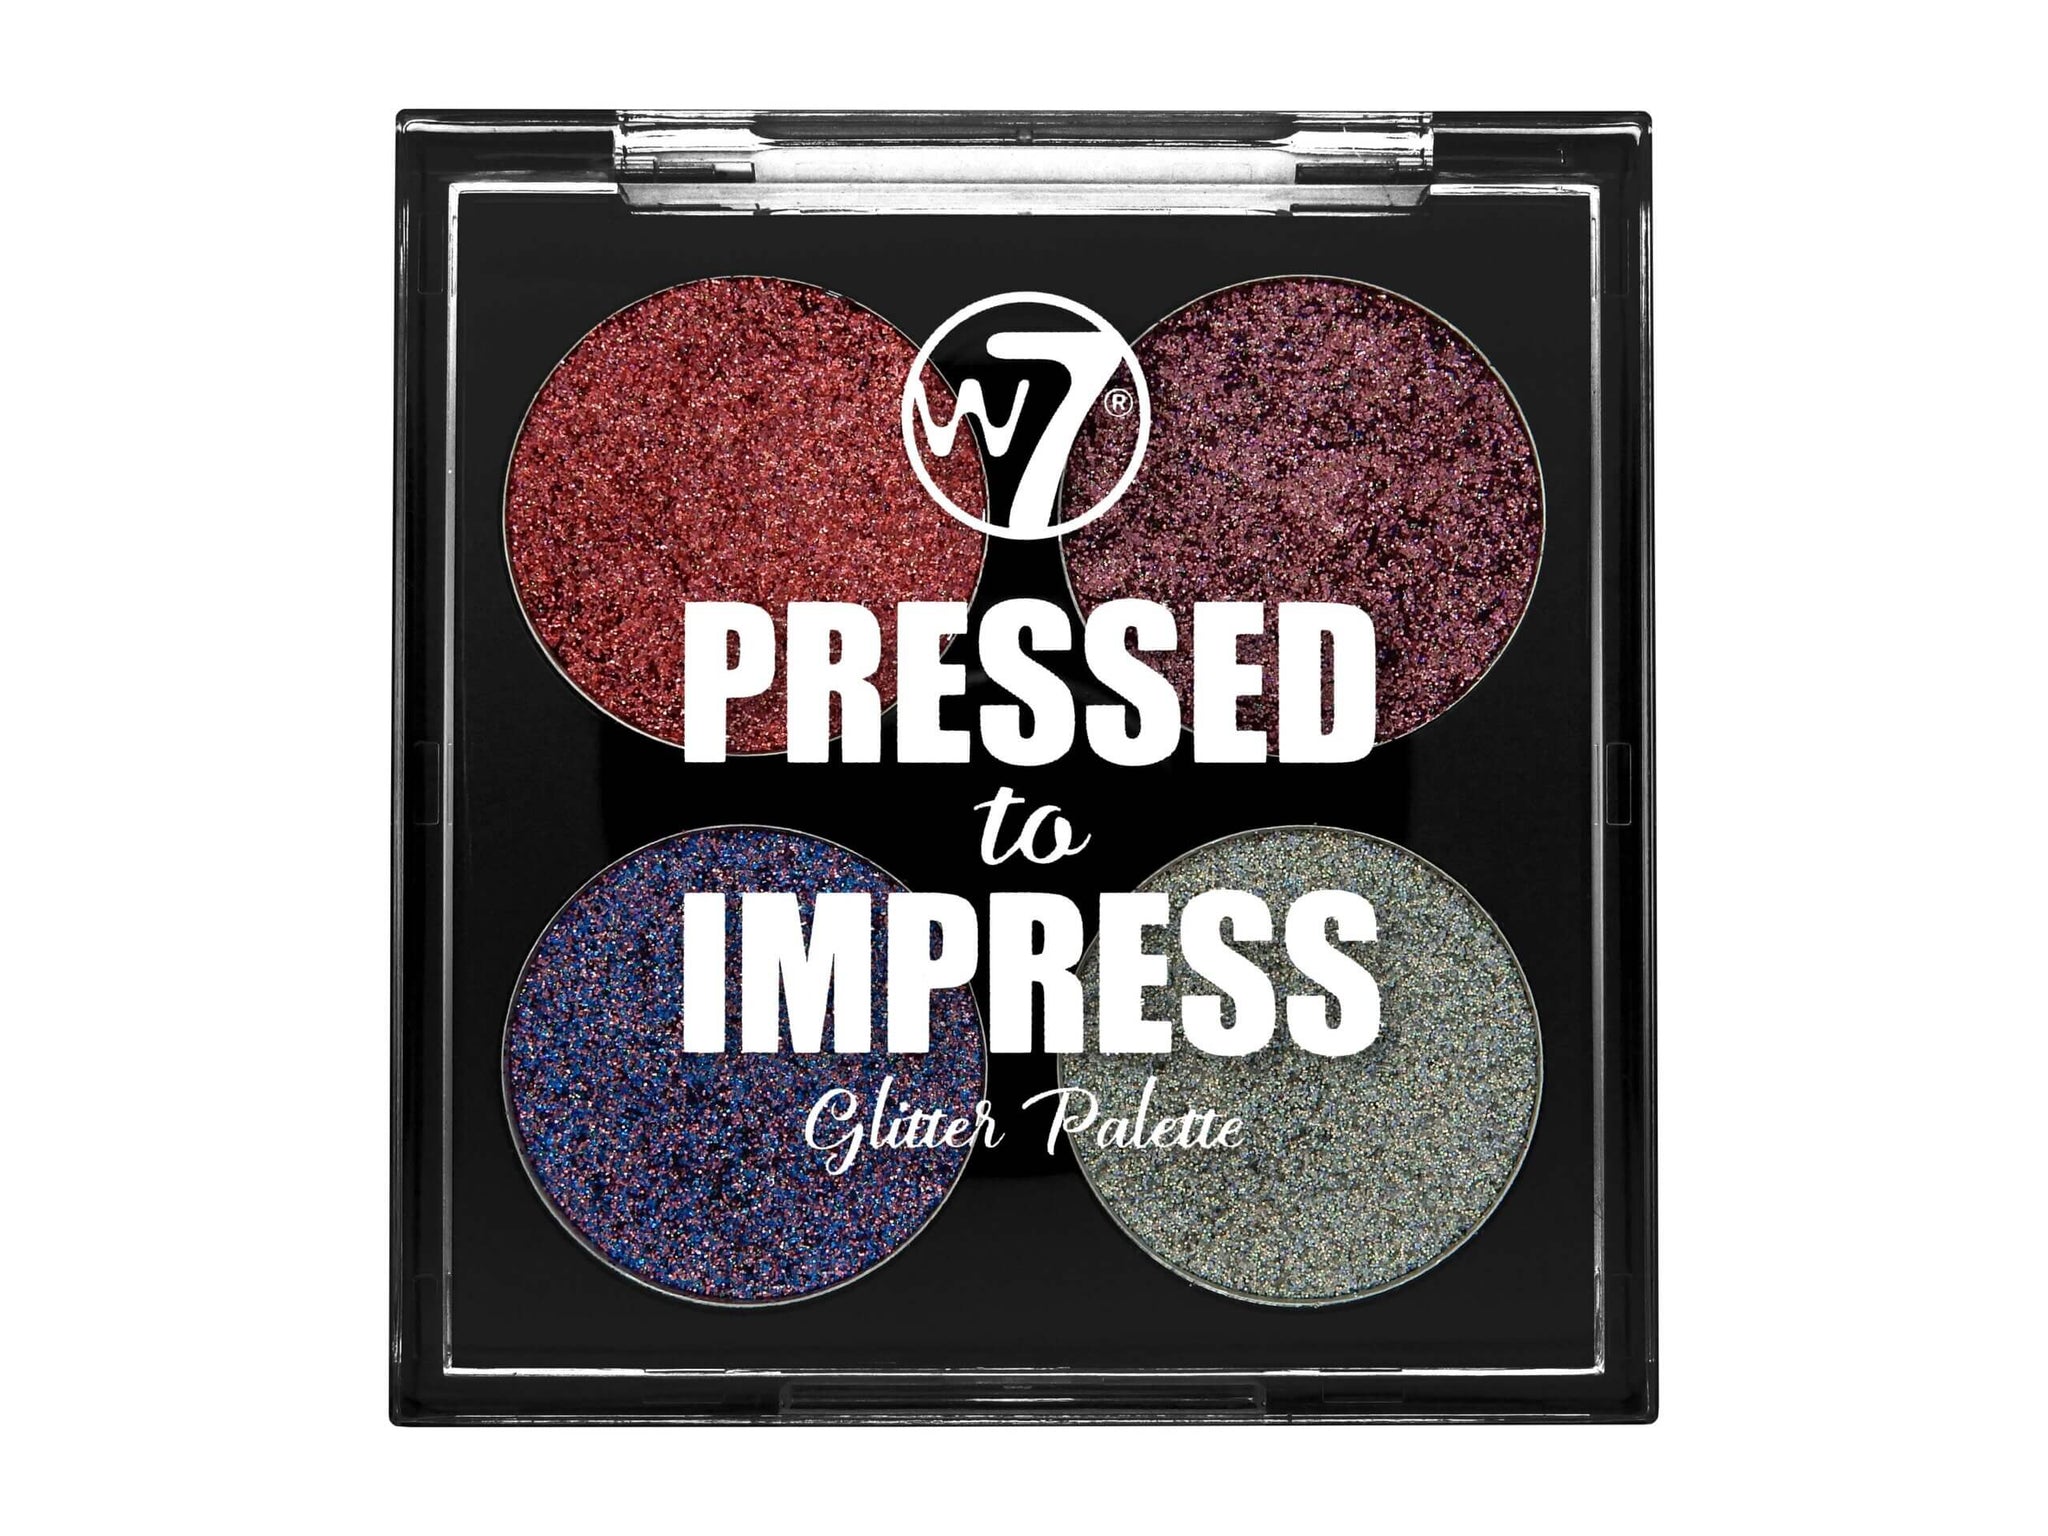 W7 Pressed to Impress Glitter Palette - All The Rage